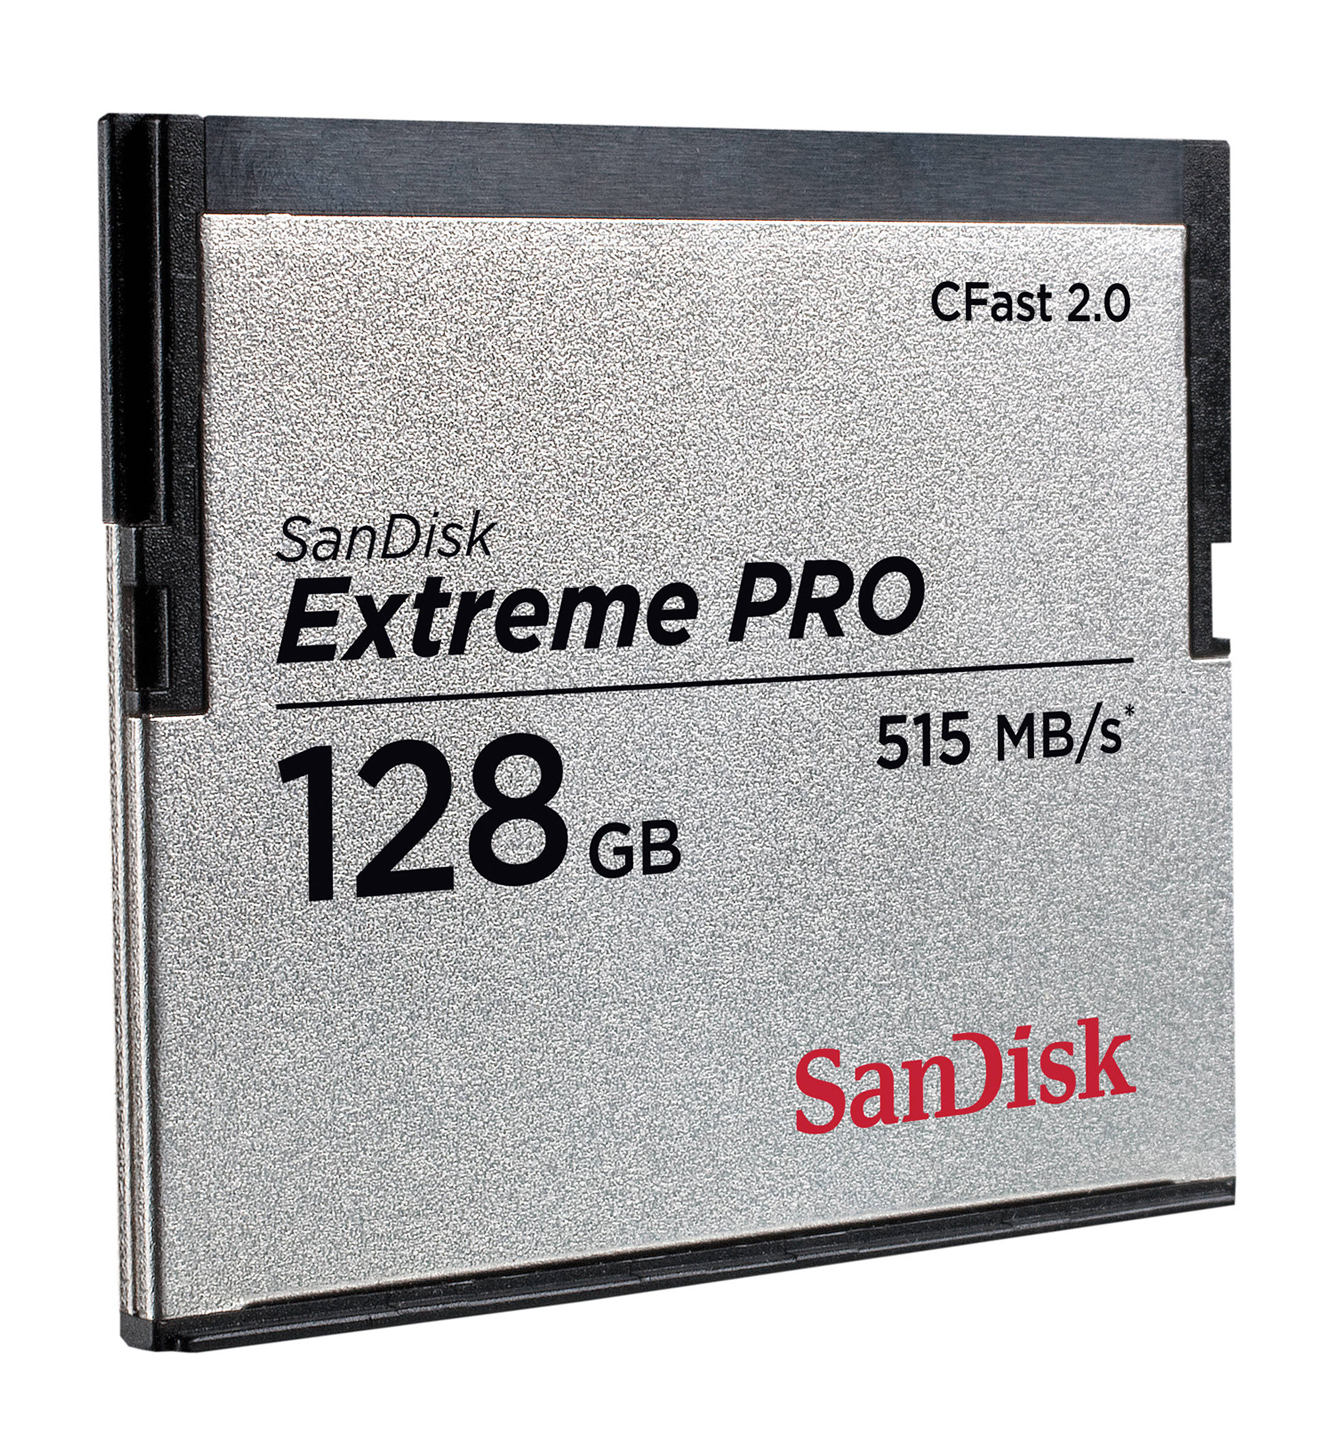 SANDISK CFAST 2.0 128GB EXTREME PRO